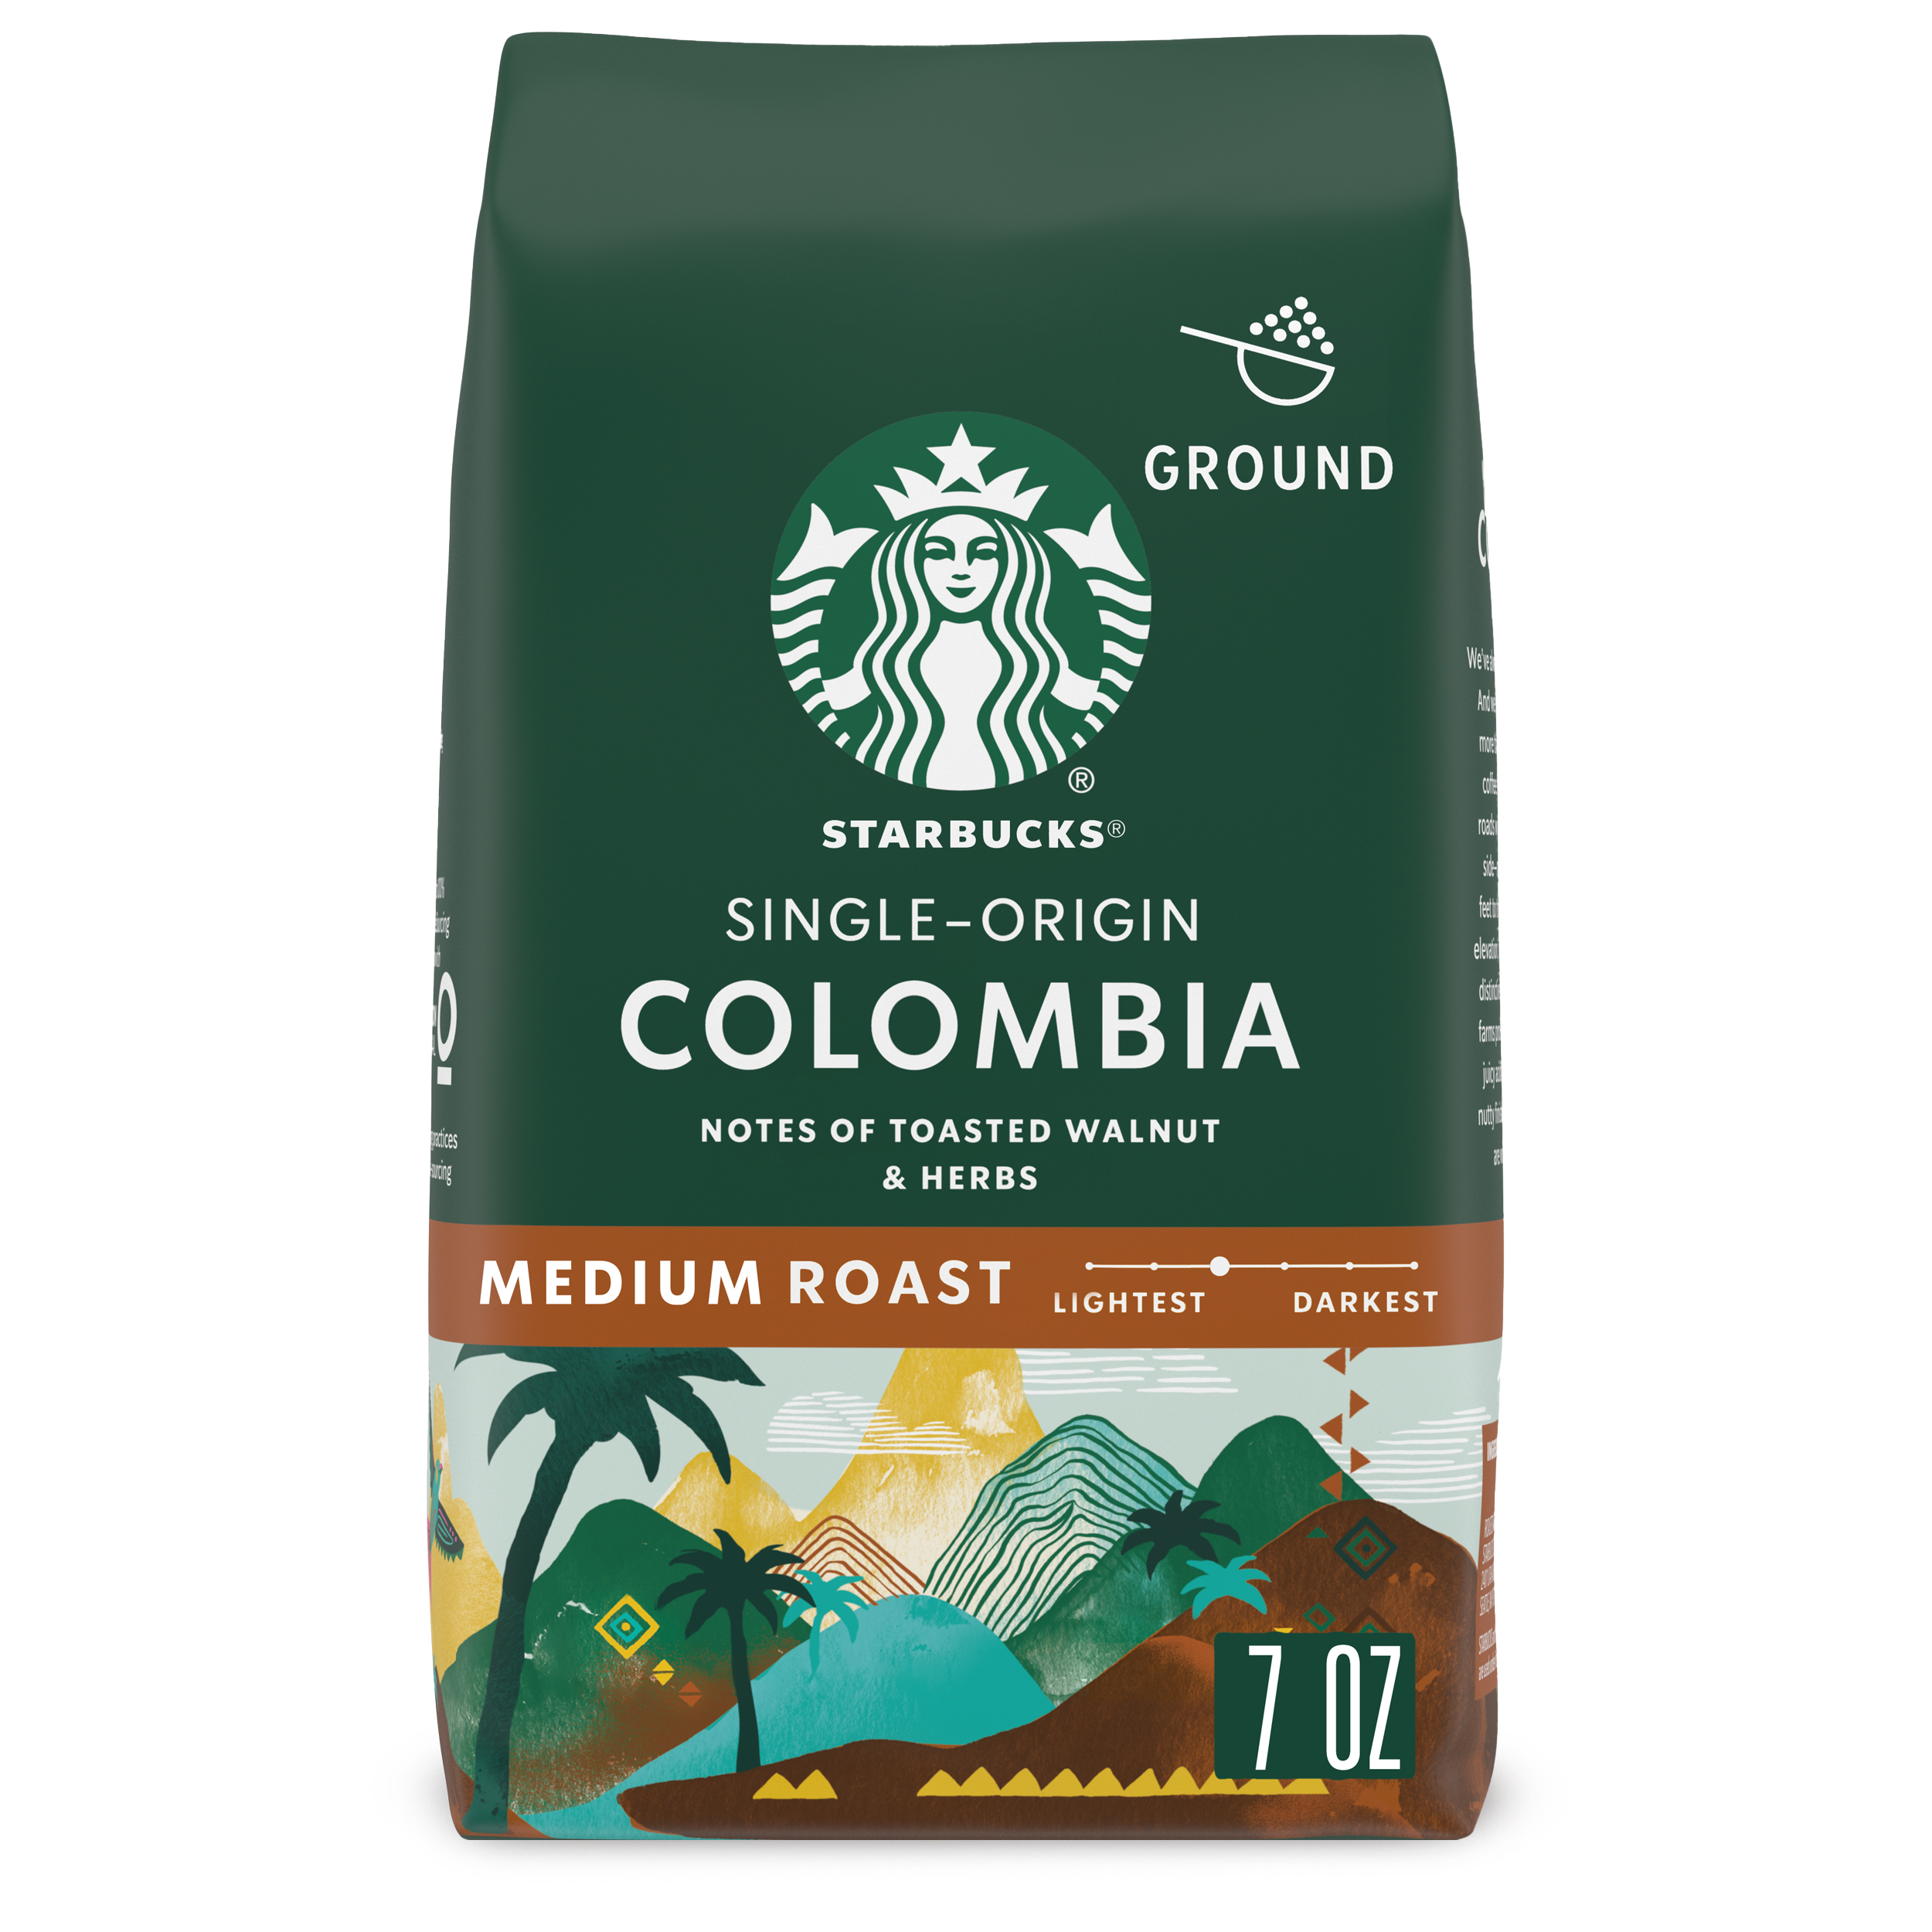 Starbucks Colombia, Ground Coffee, Medium Roast, 7 oz - image 1 of 8